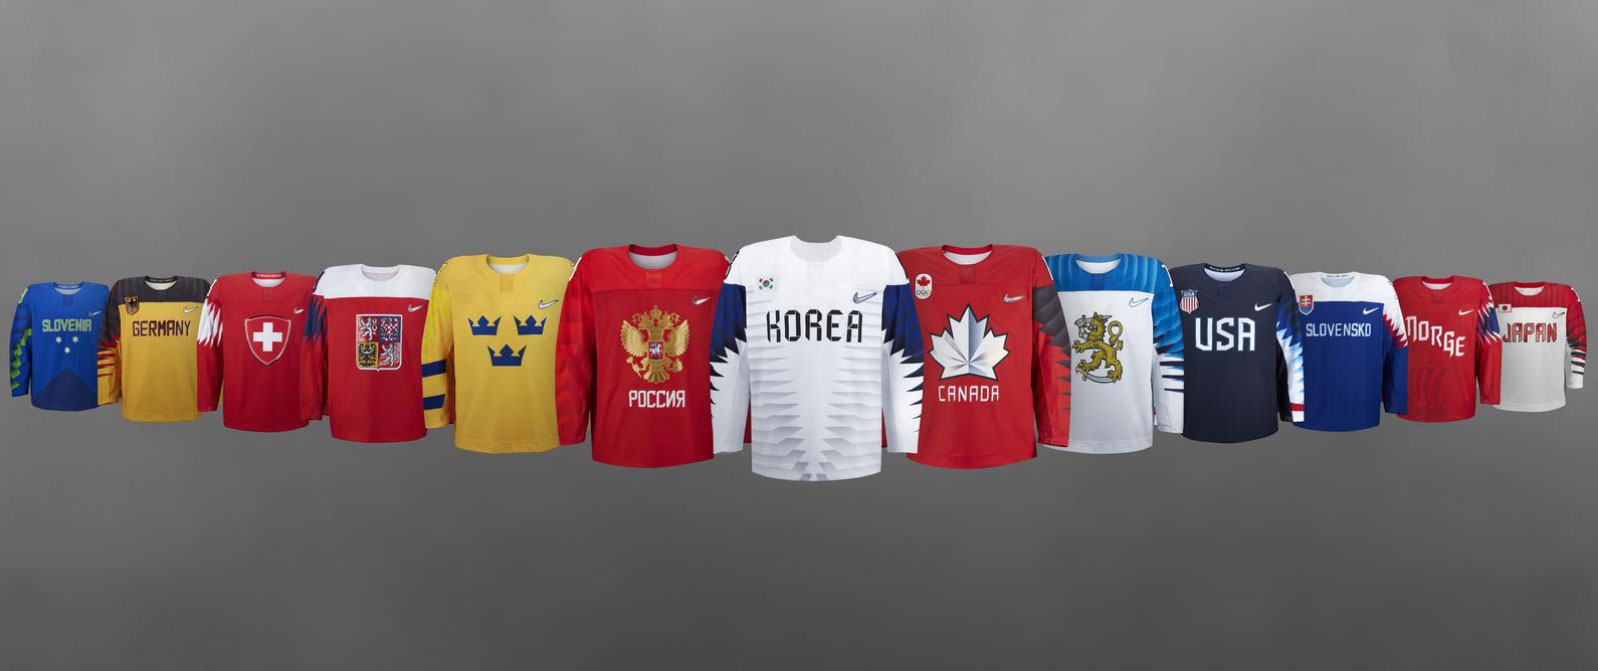 IIHF Nike Japan Hockey Jersey (Size 50)